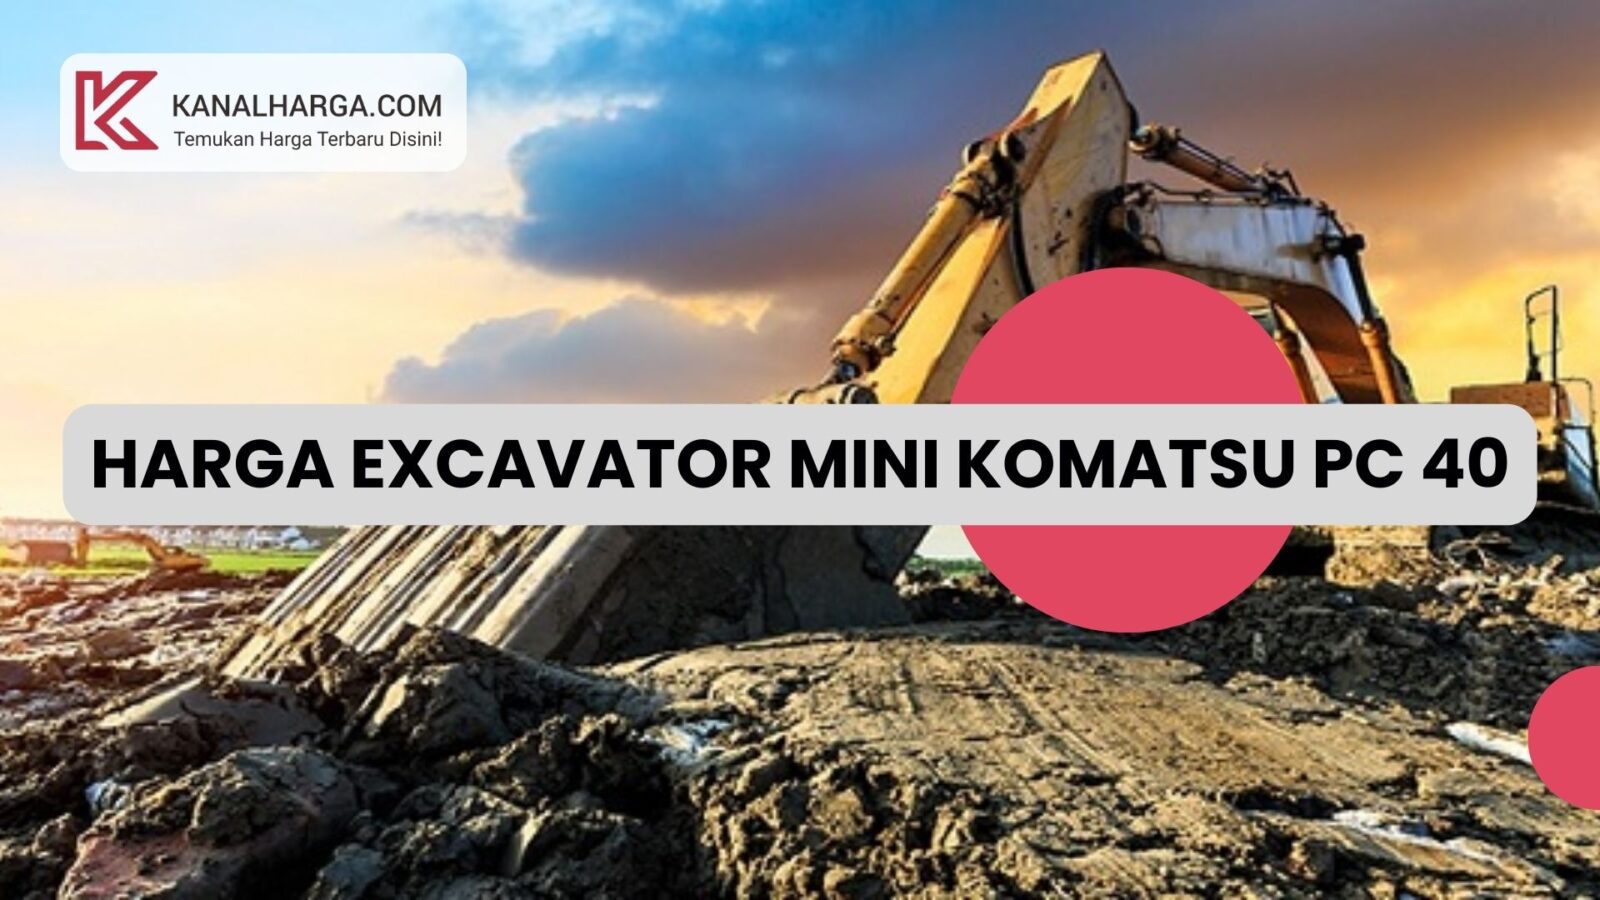 Harga Excavator Mini Komatsu PC 40 Harga Excavator Mini Komatsu PC 40